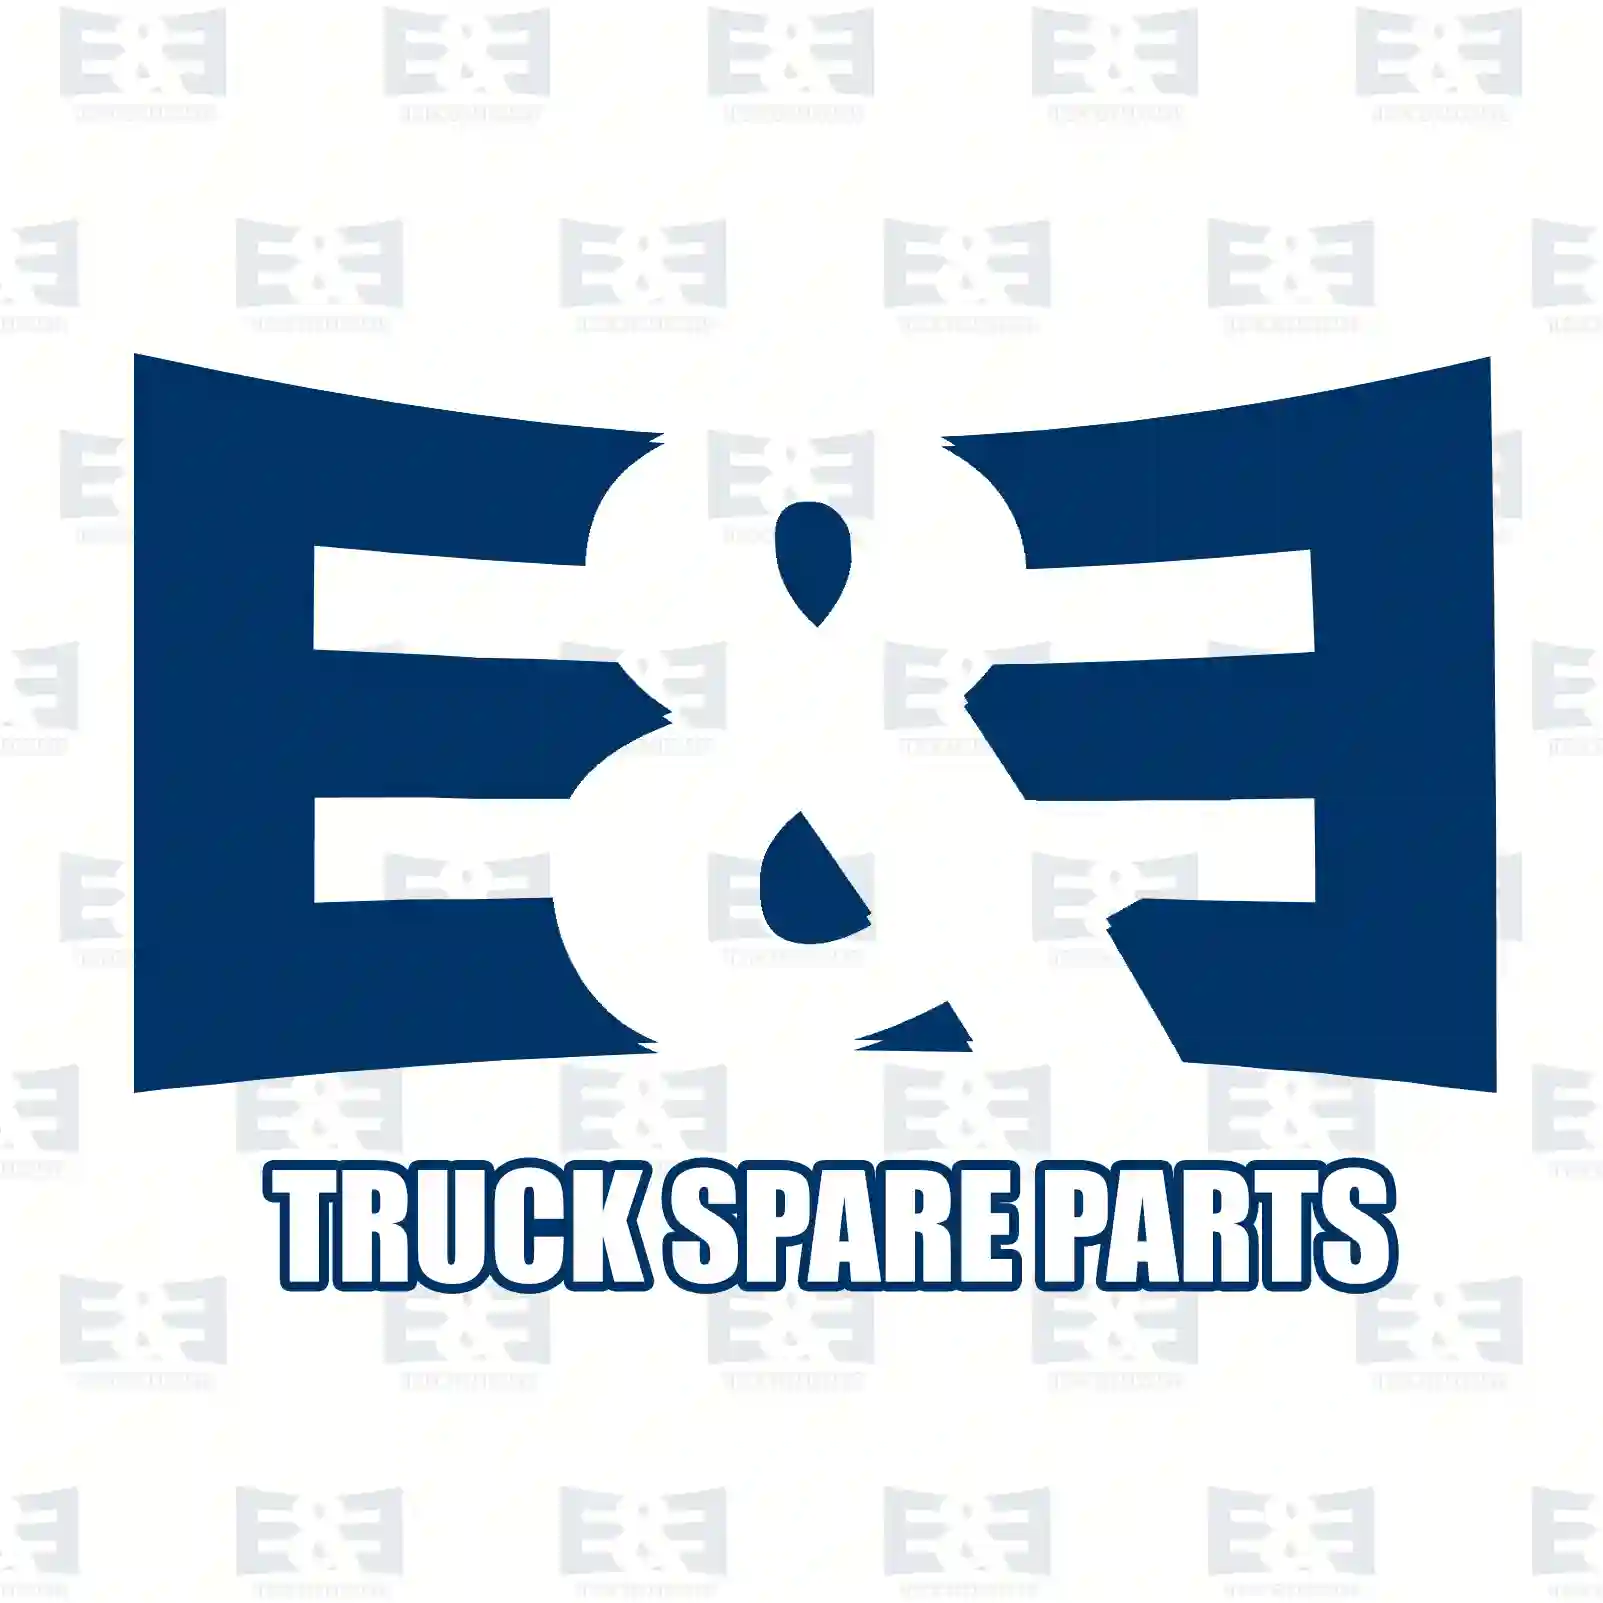 Belts V-belt, EE No 2E2285789 ,  oem no:04688854, 04809679, 98432117, 98434470, 04688854, 04809679, 04809680, 04847051, 4809679, 4809680, 4847051, 98432117, 98434470 E&E Truck Spare Parts | Truck Spare Parts, Auotomotive Spare Parts